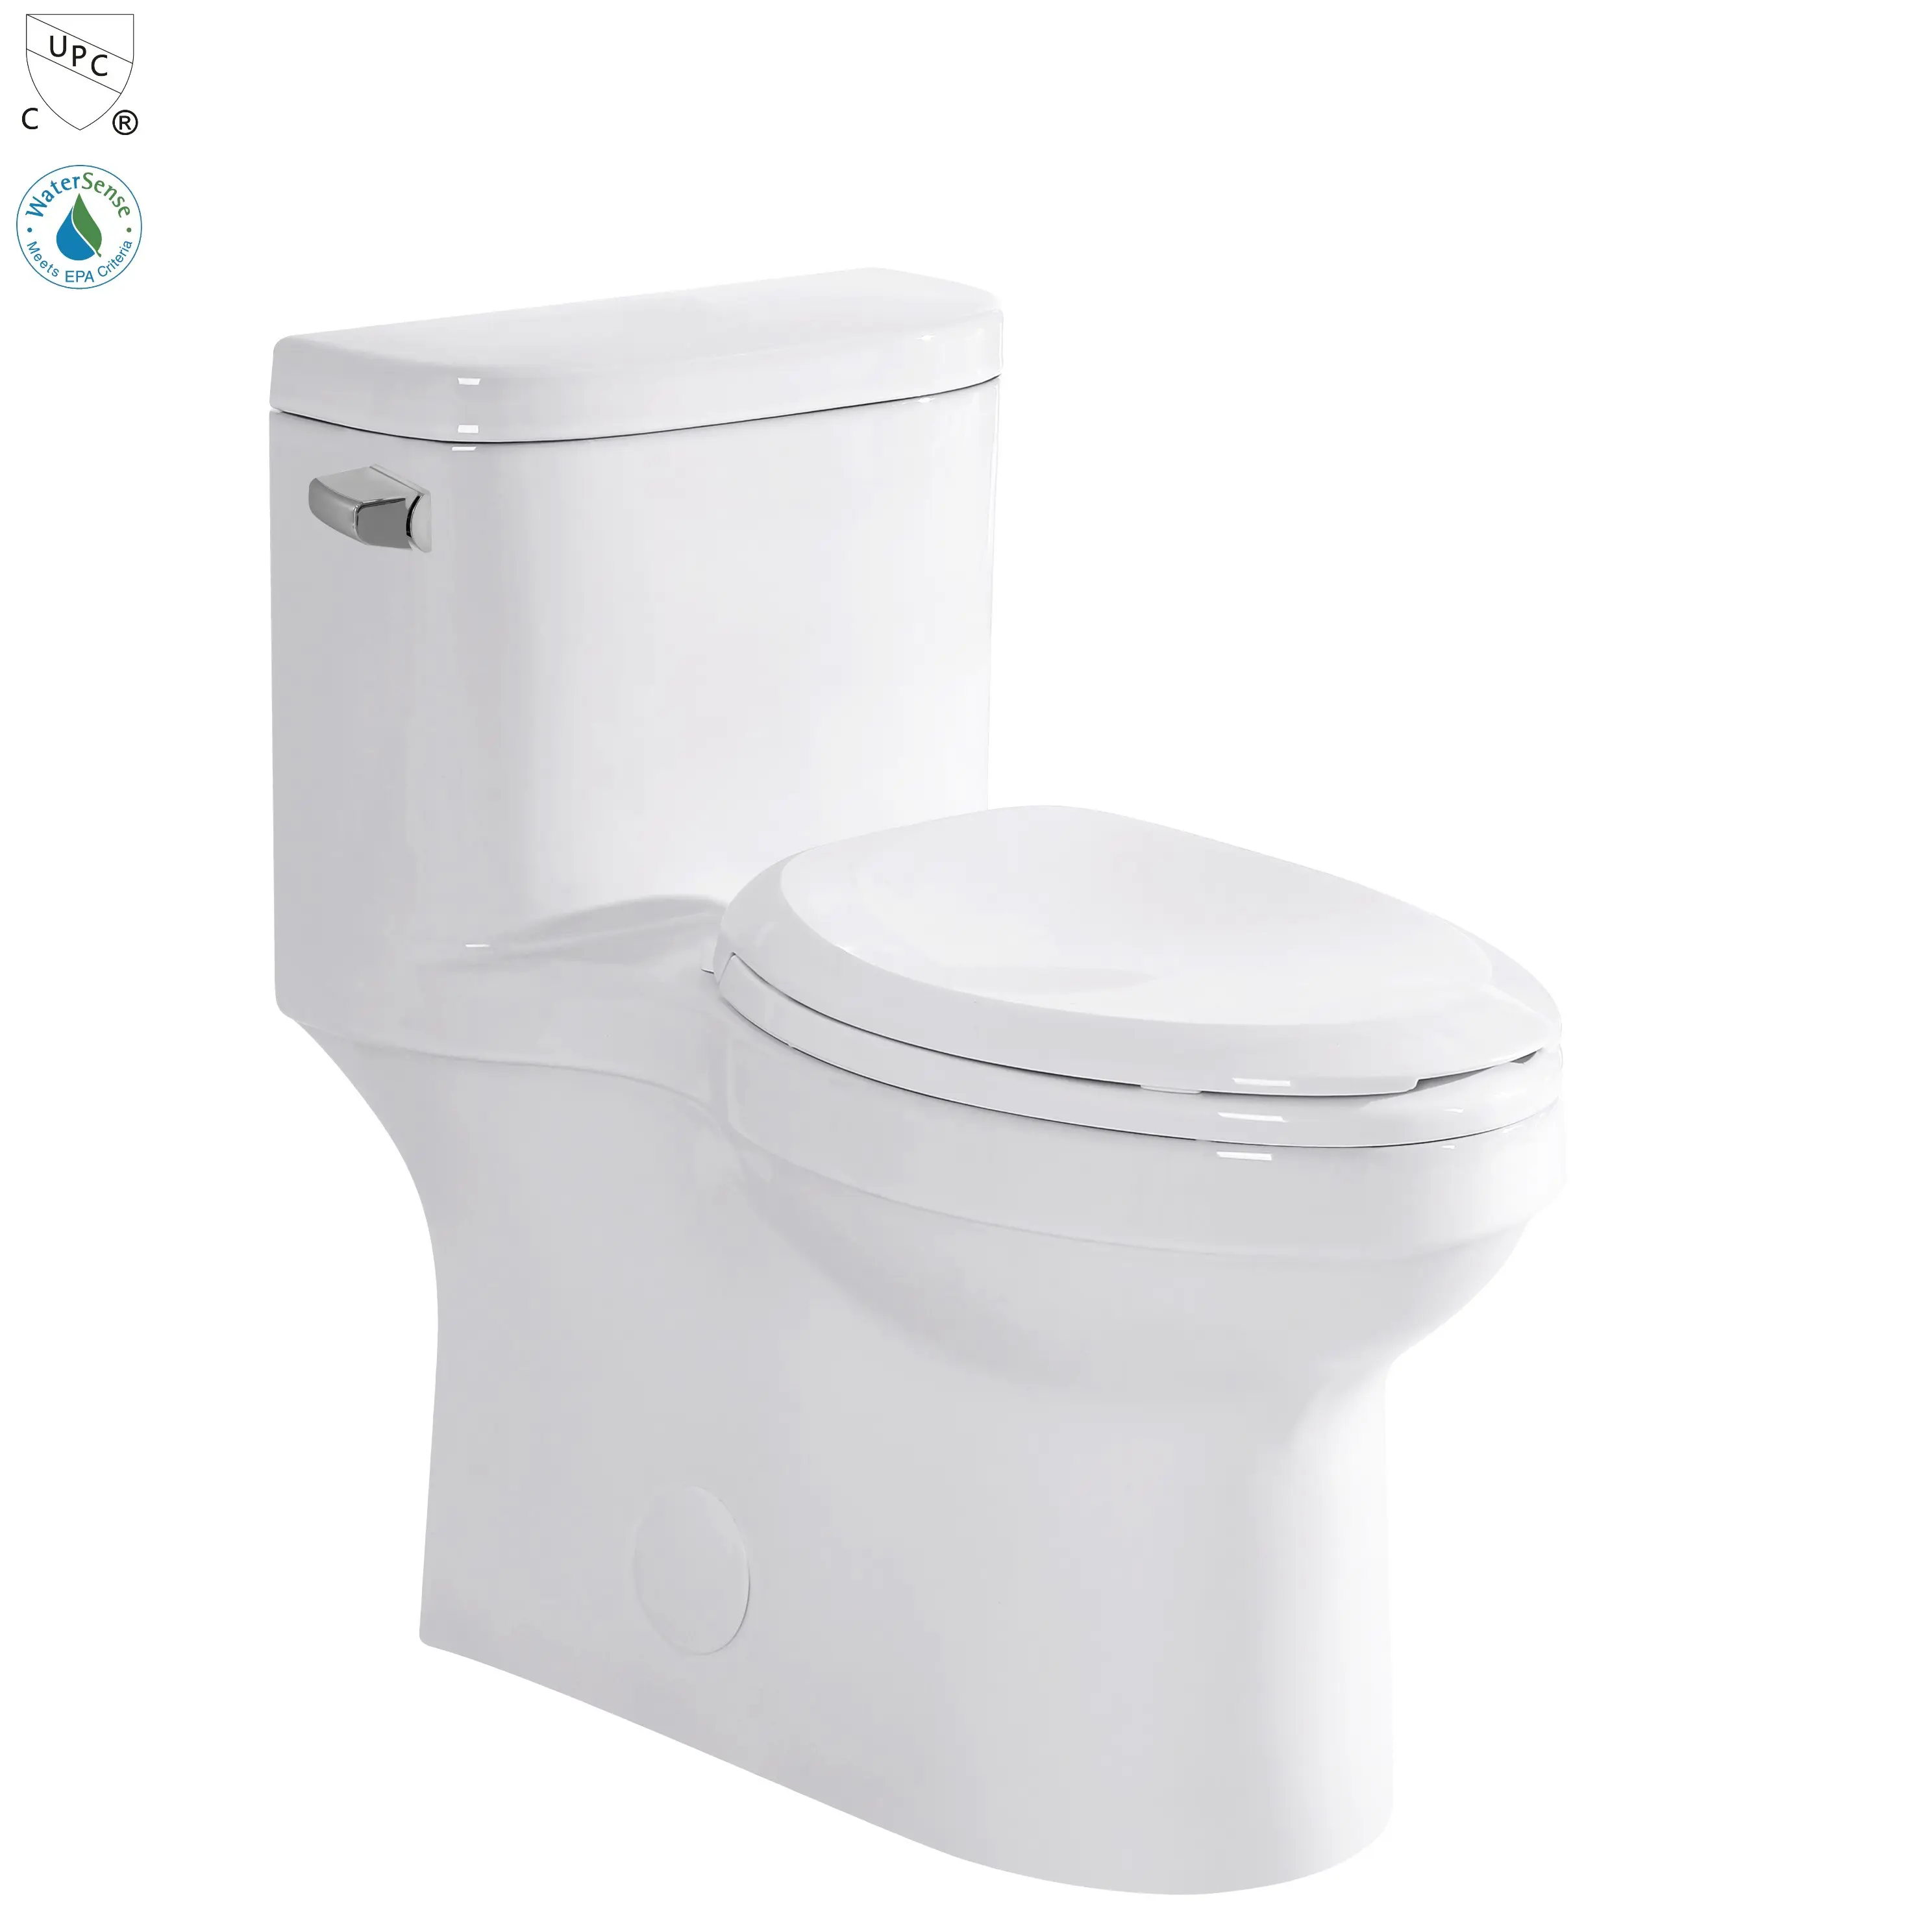 Produk baru kualitas terbaik murah s trap wc Siphon Flushing one piece lemari Air kamar kecil CUPC keramik putih piss wc mangkuk toilet